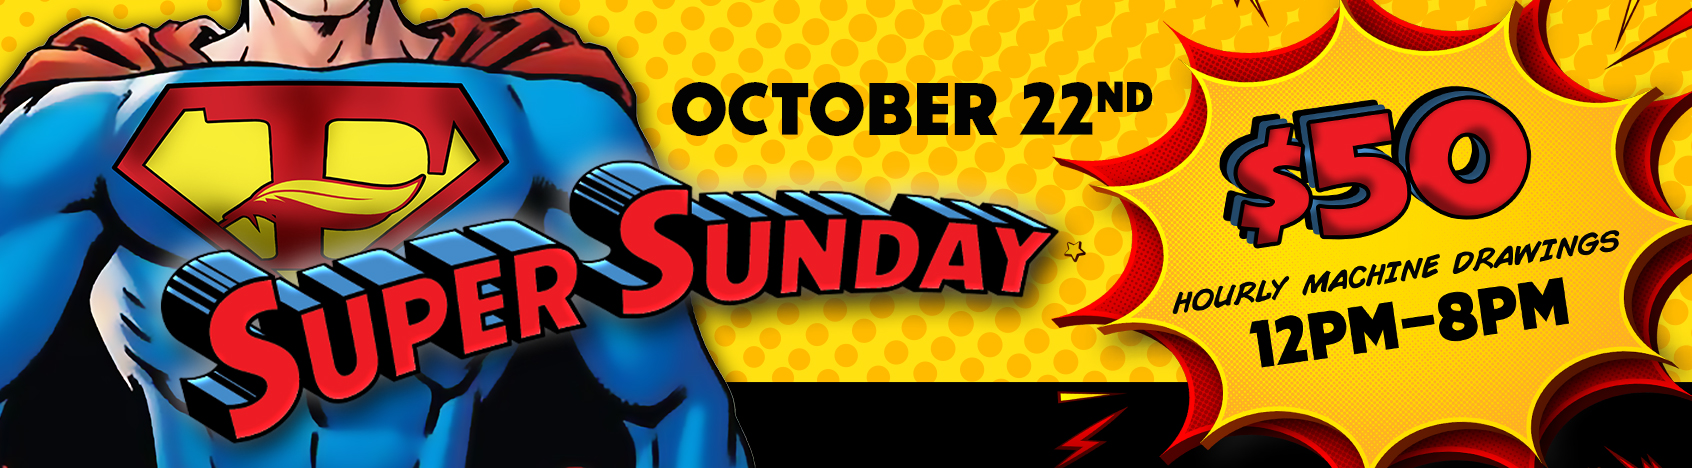 Super Sunday October 22